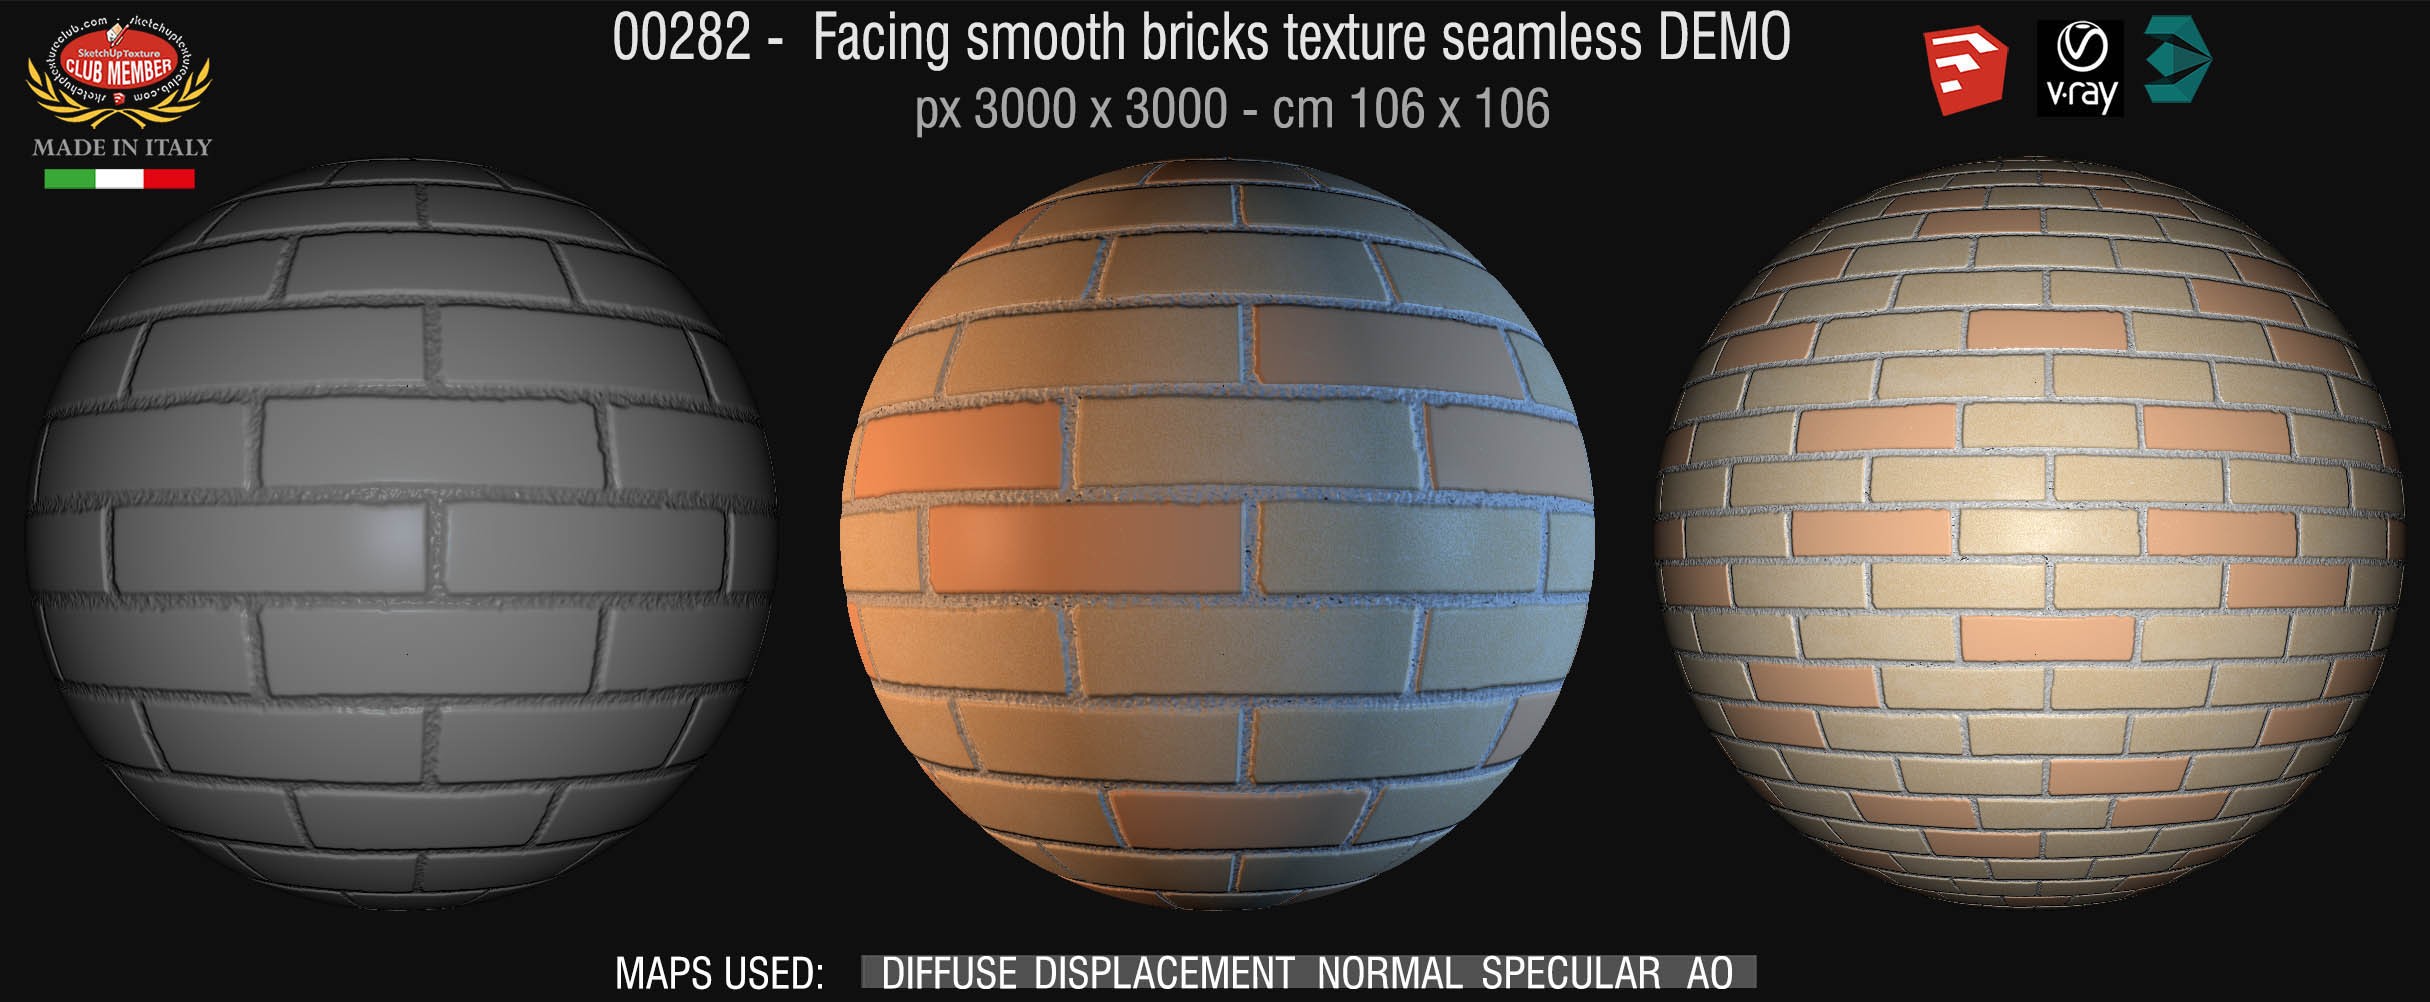 00282 Facing smooth bricks texture seamless + maps DEMO